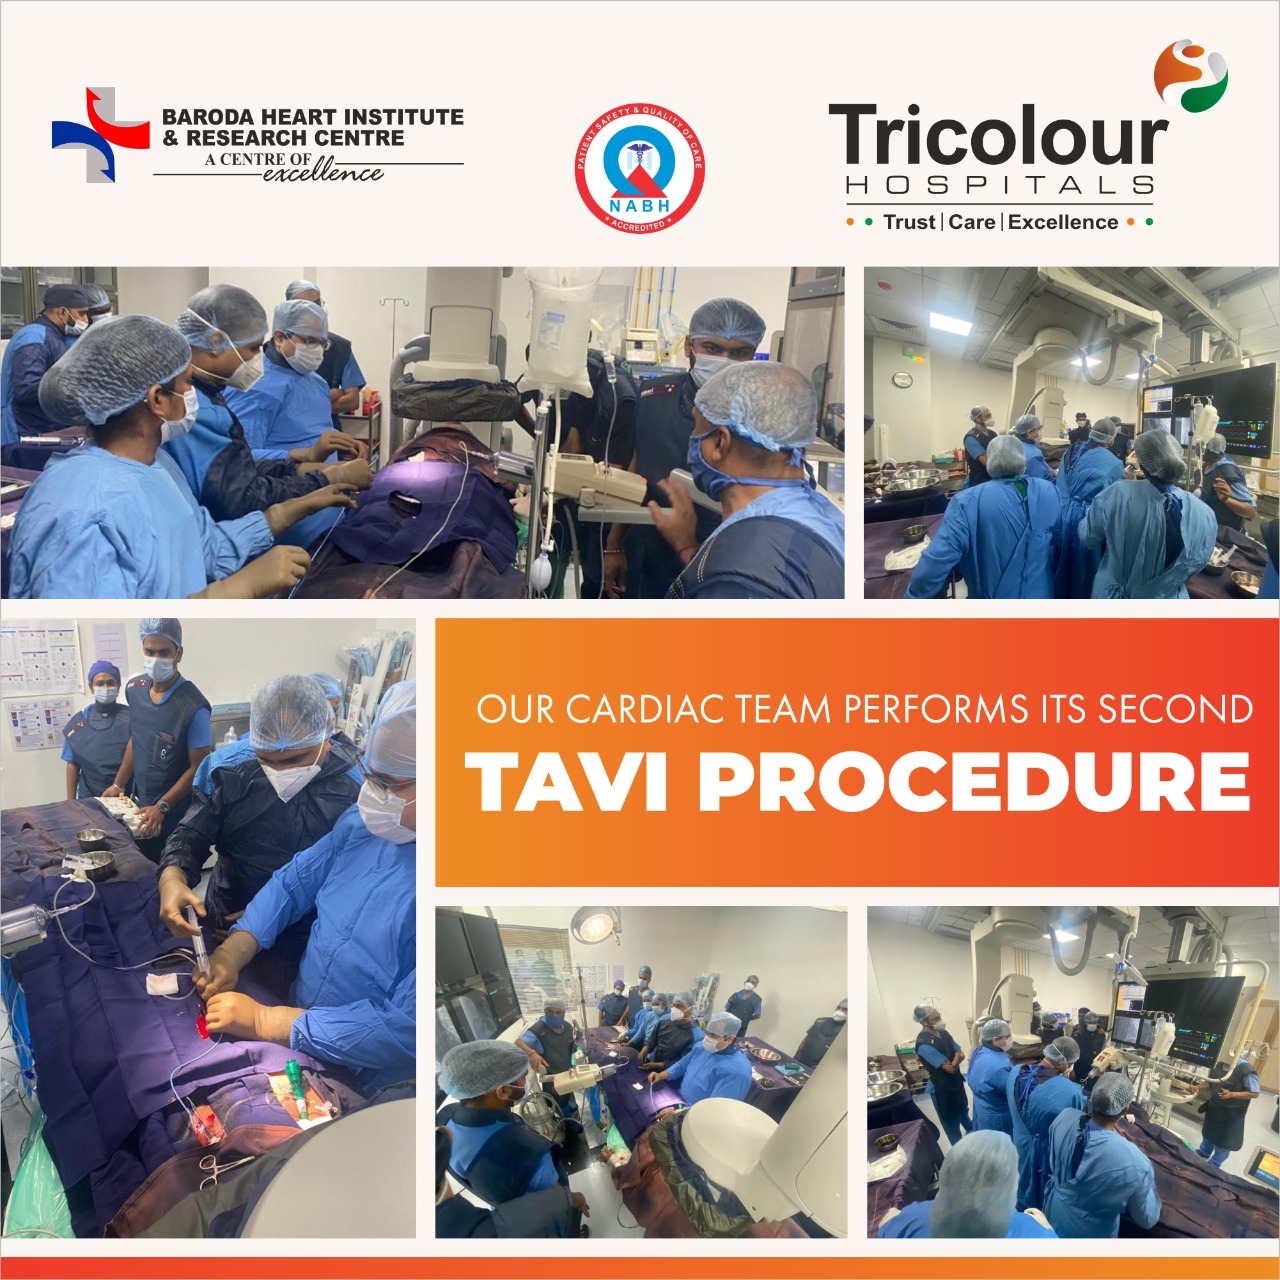 Our Cardiac team performs its second TAVI procedure